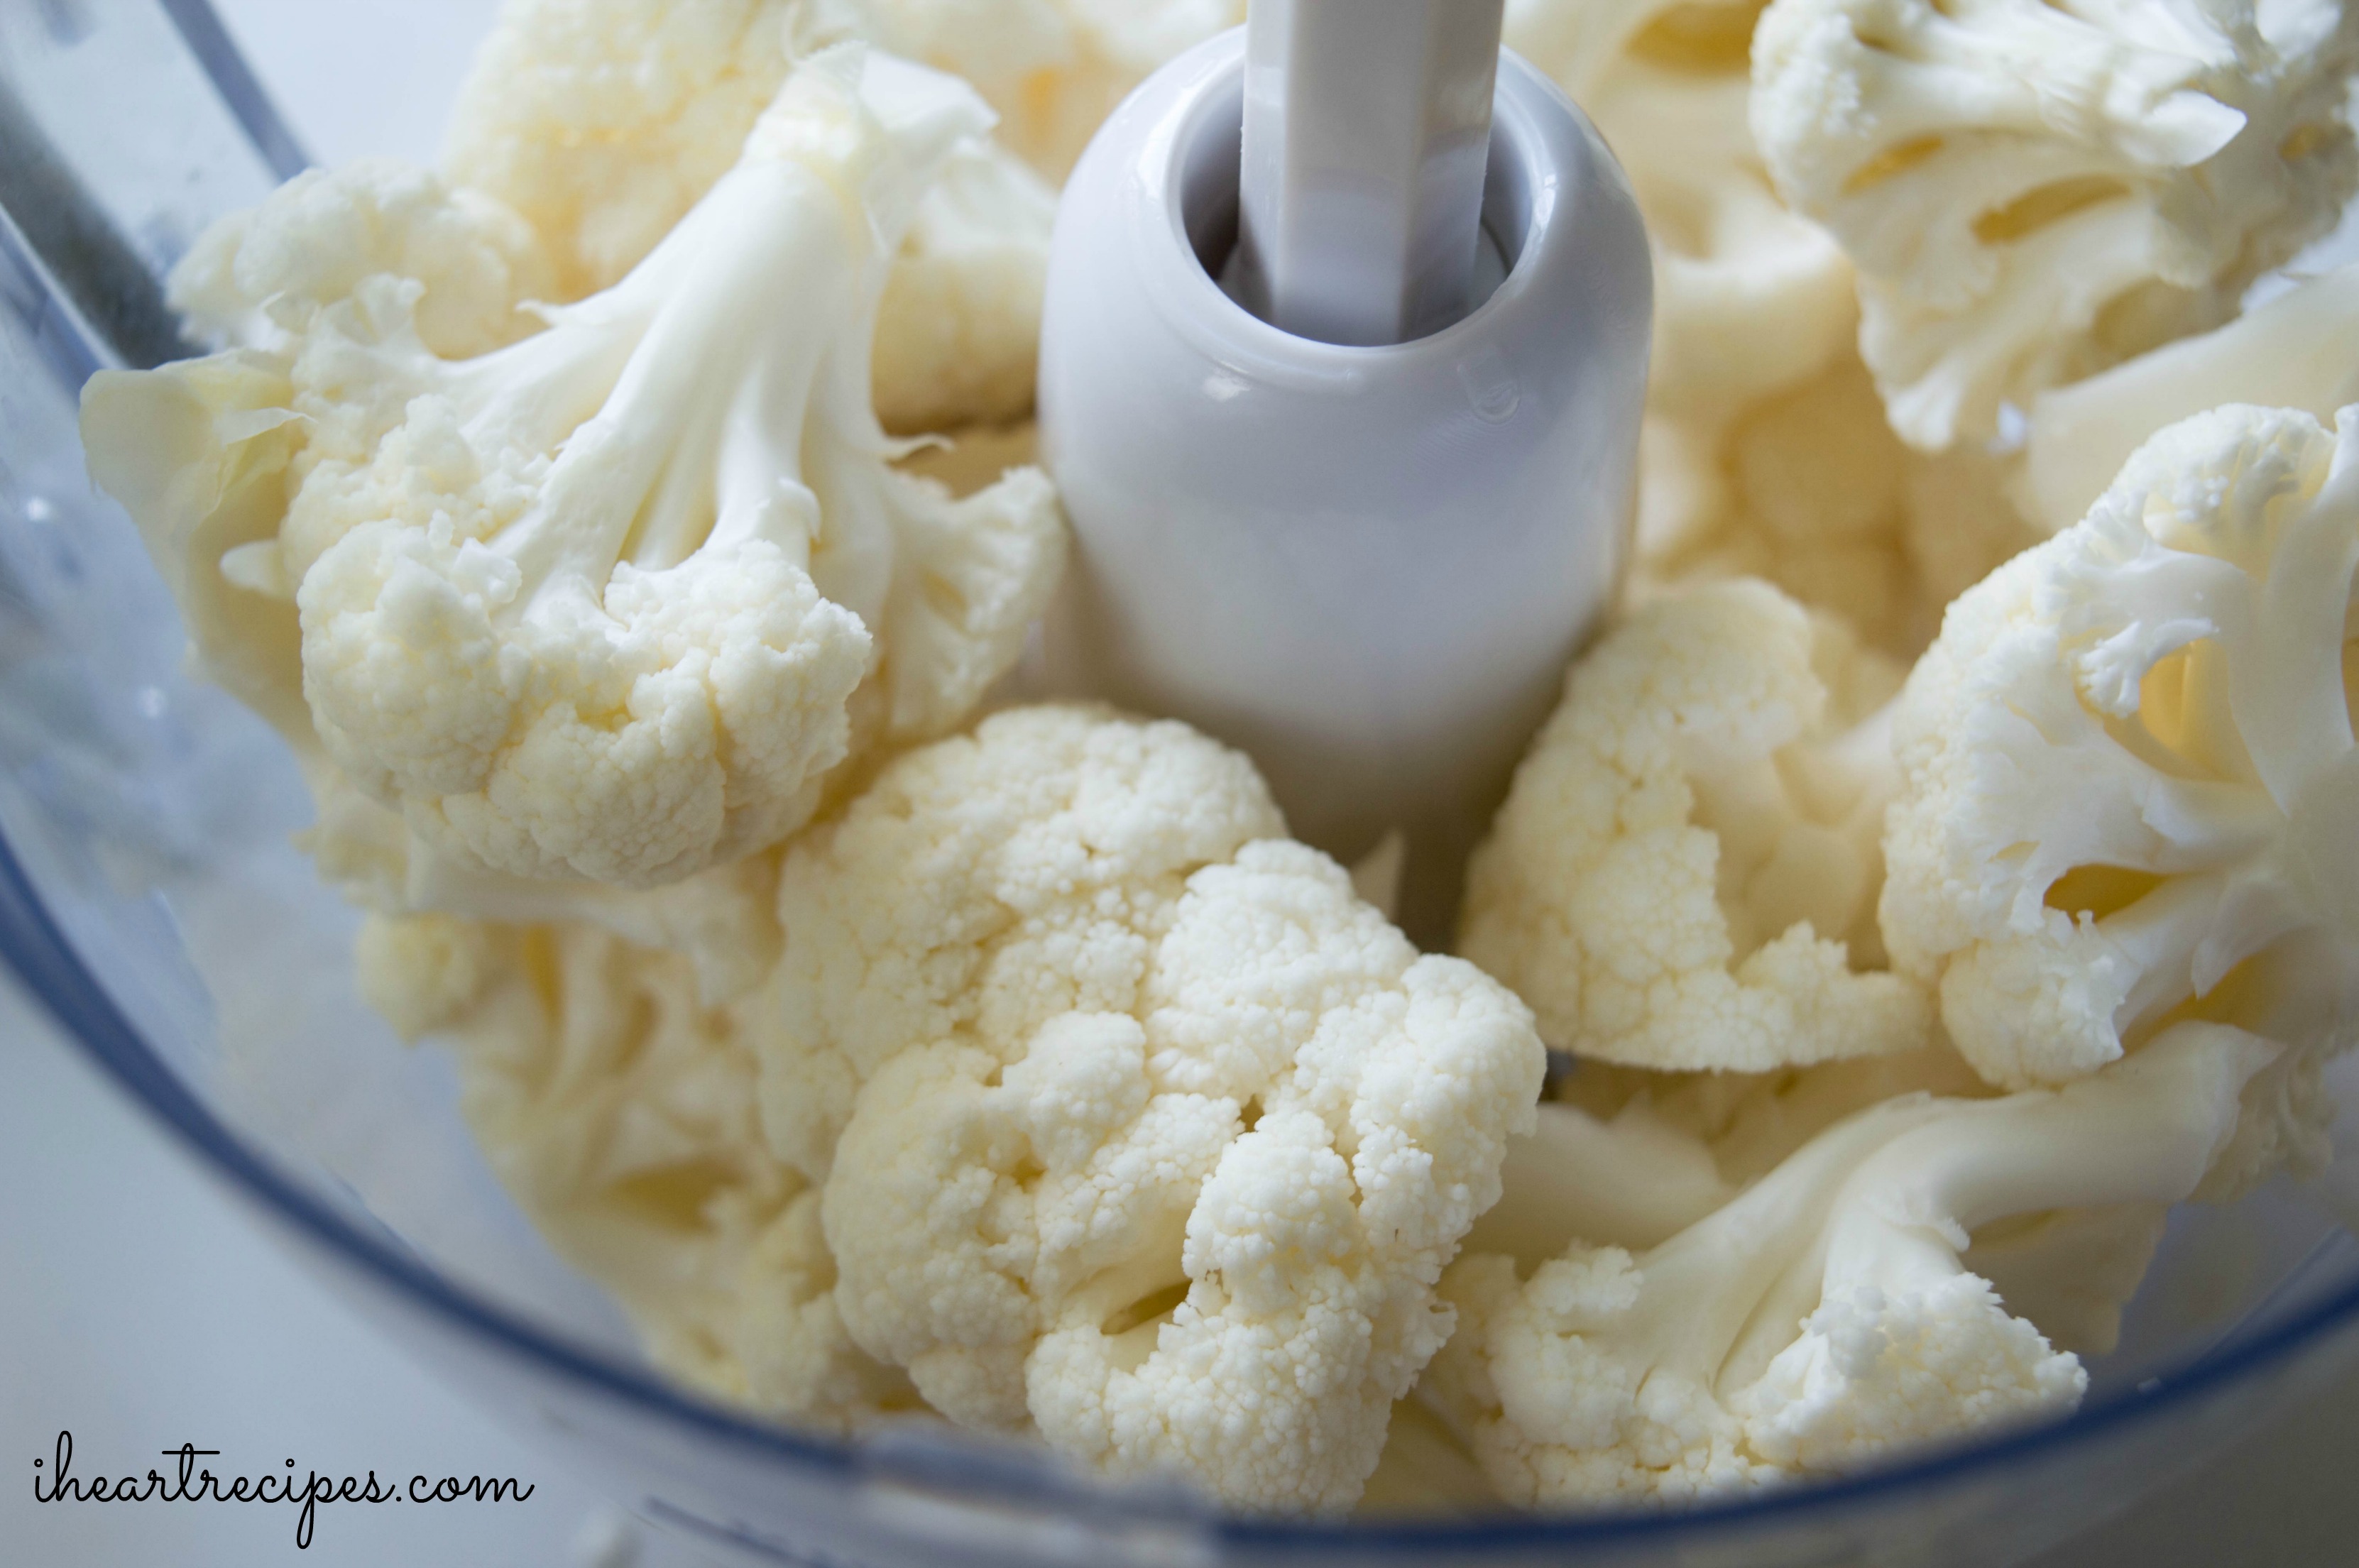 To make riced cauliflower, add a head of rice into a food processor.